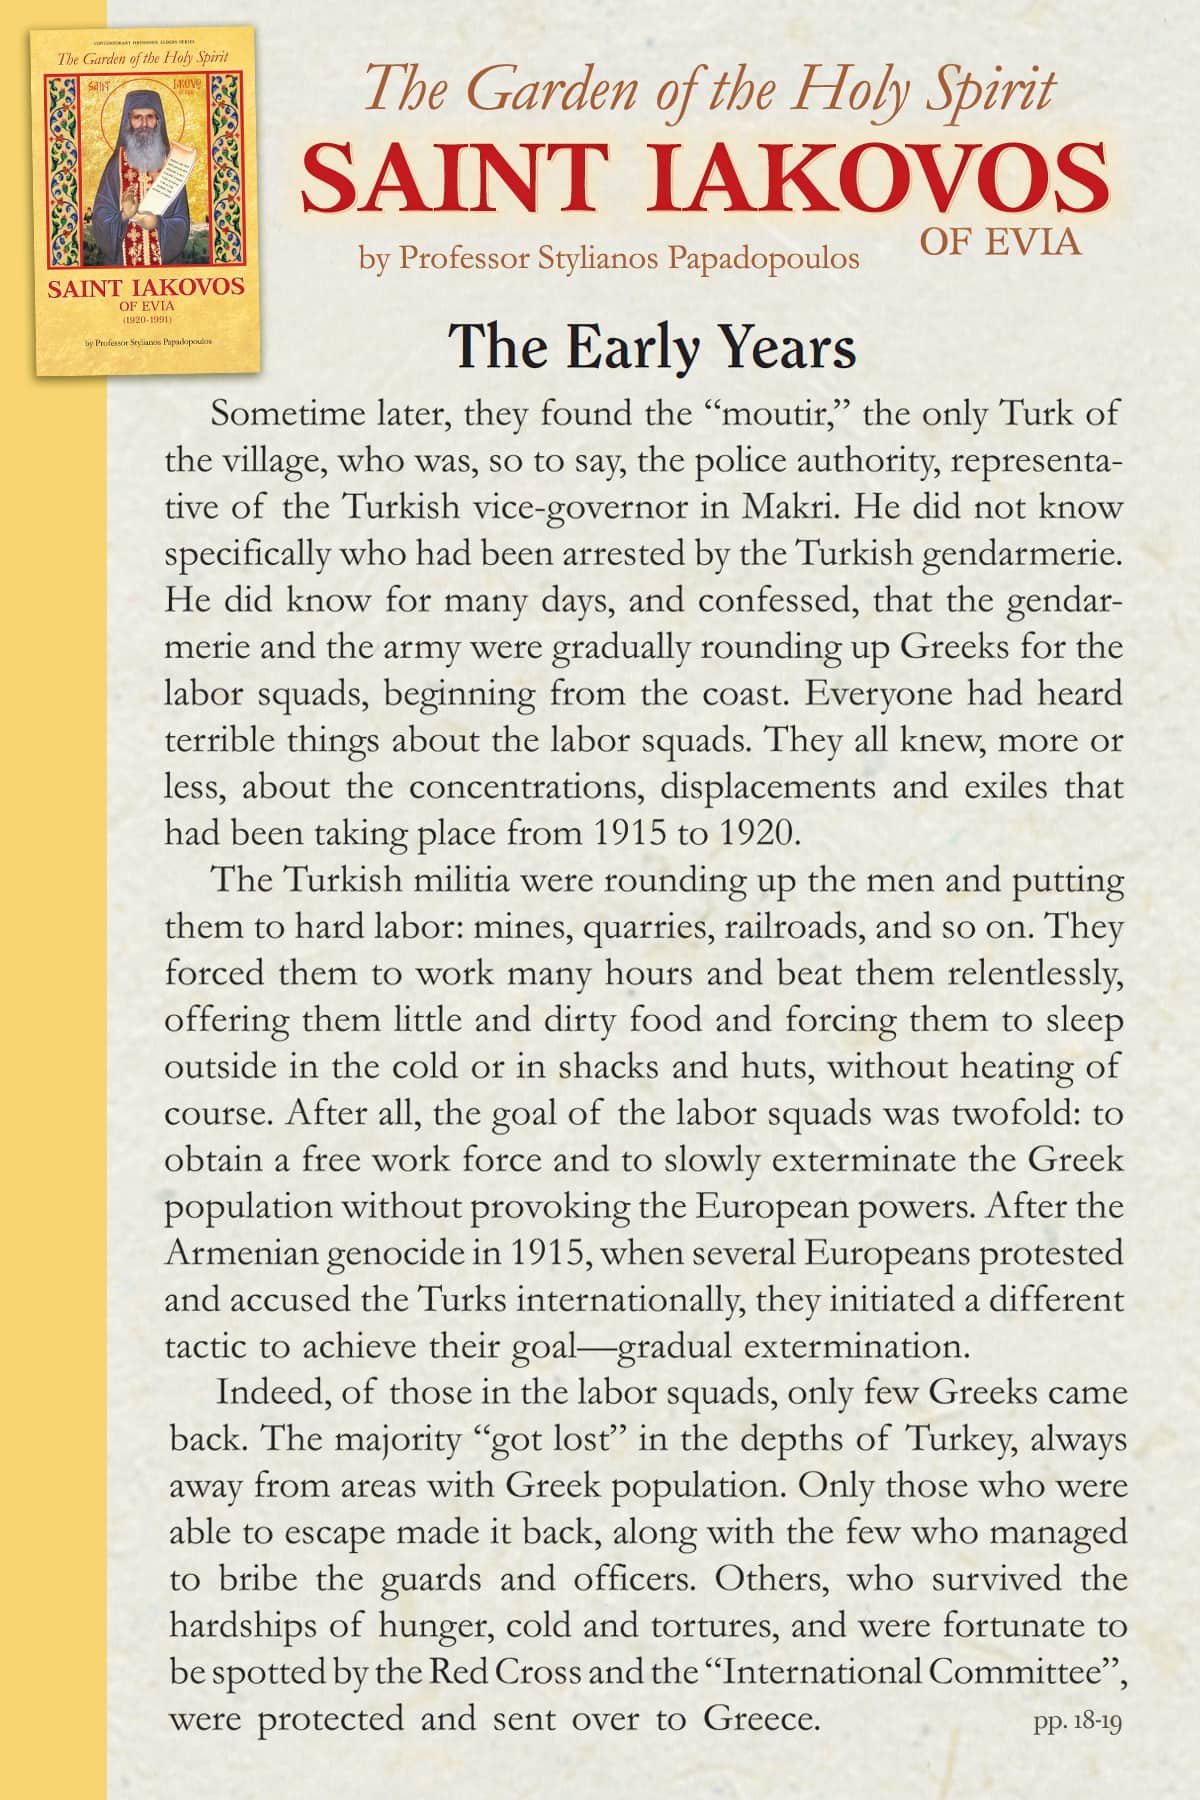 Gradual extermination of the Greeks